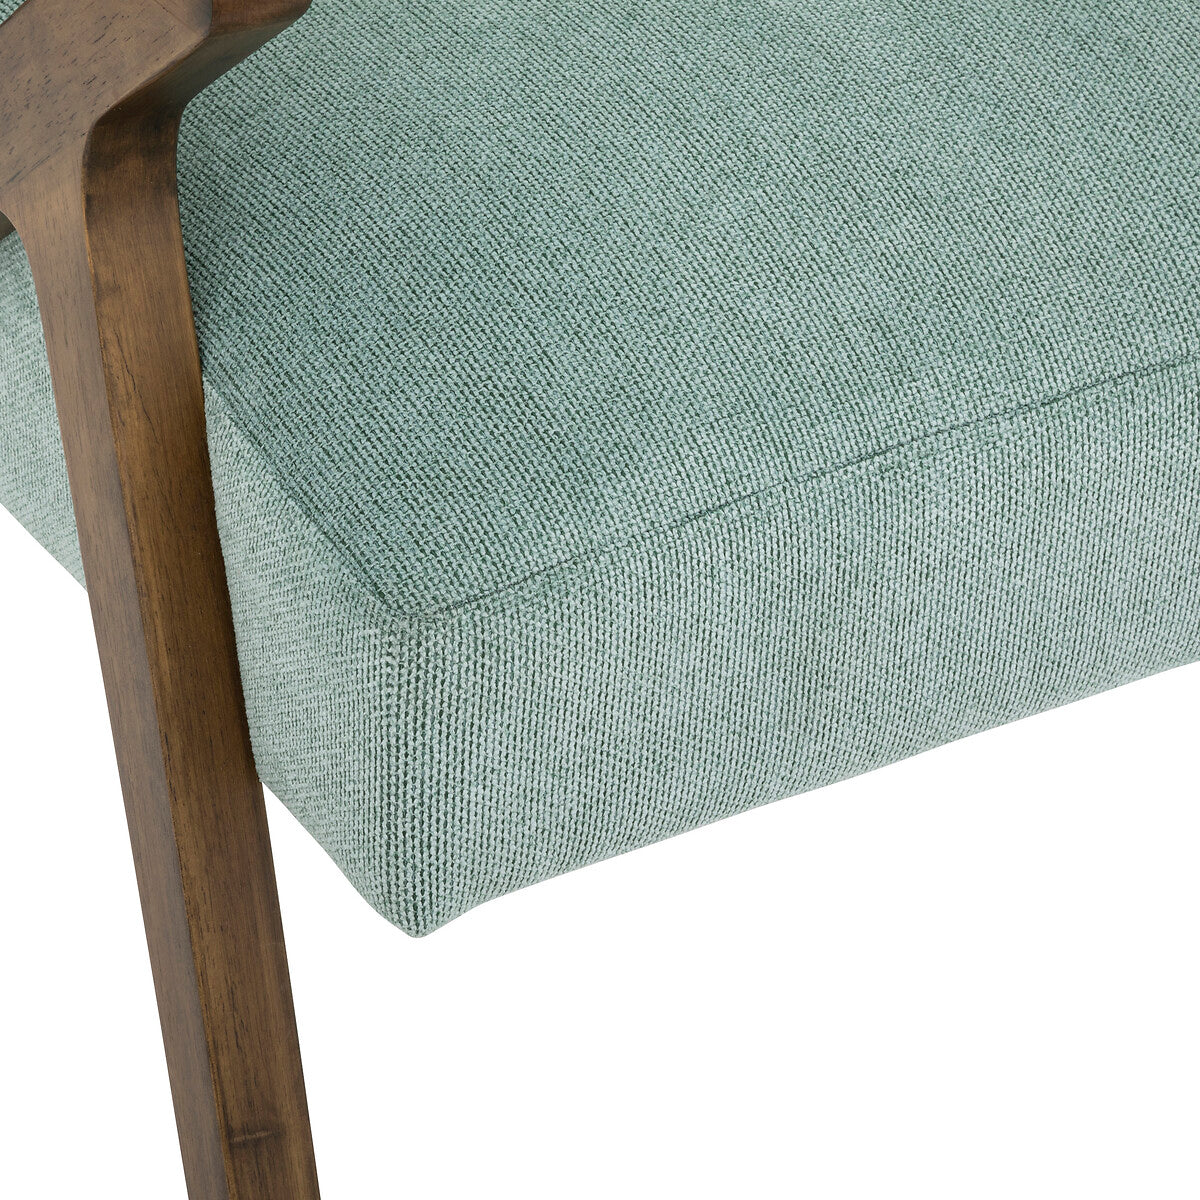 BEAU Basile velvet armchair - L75xD68xH82cm - Jade green